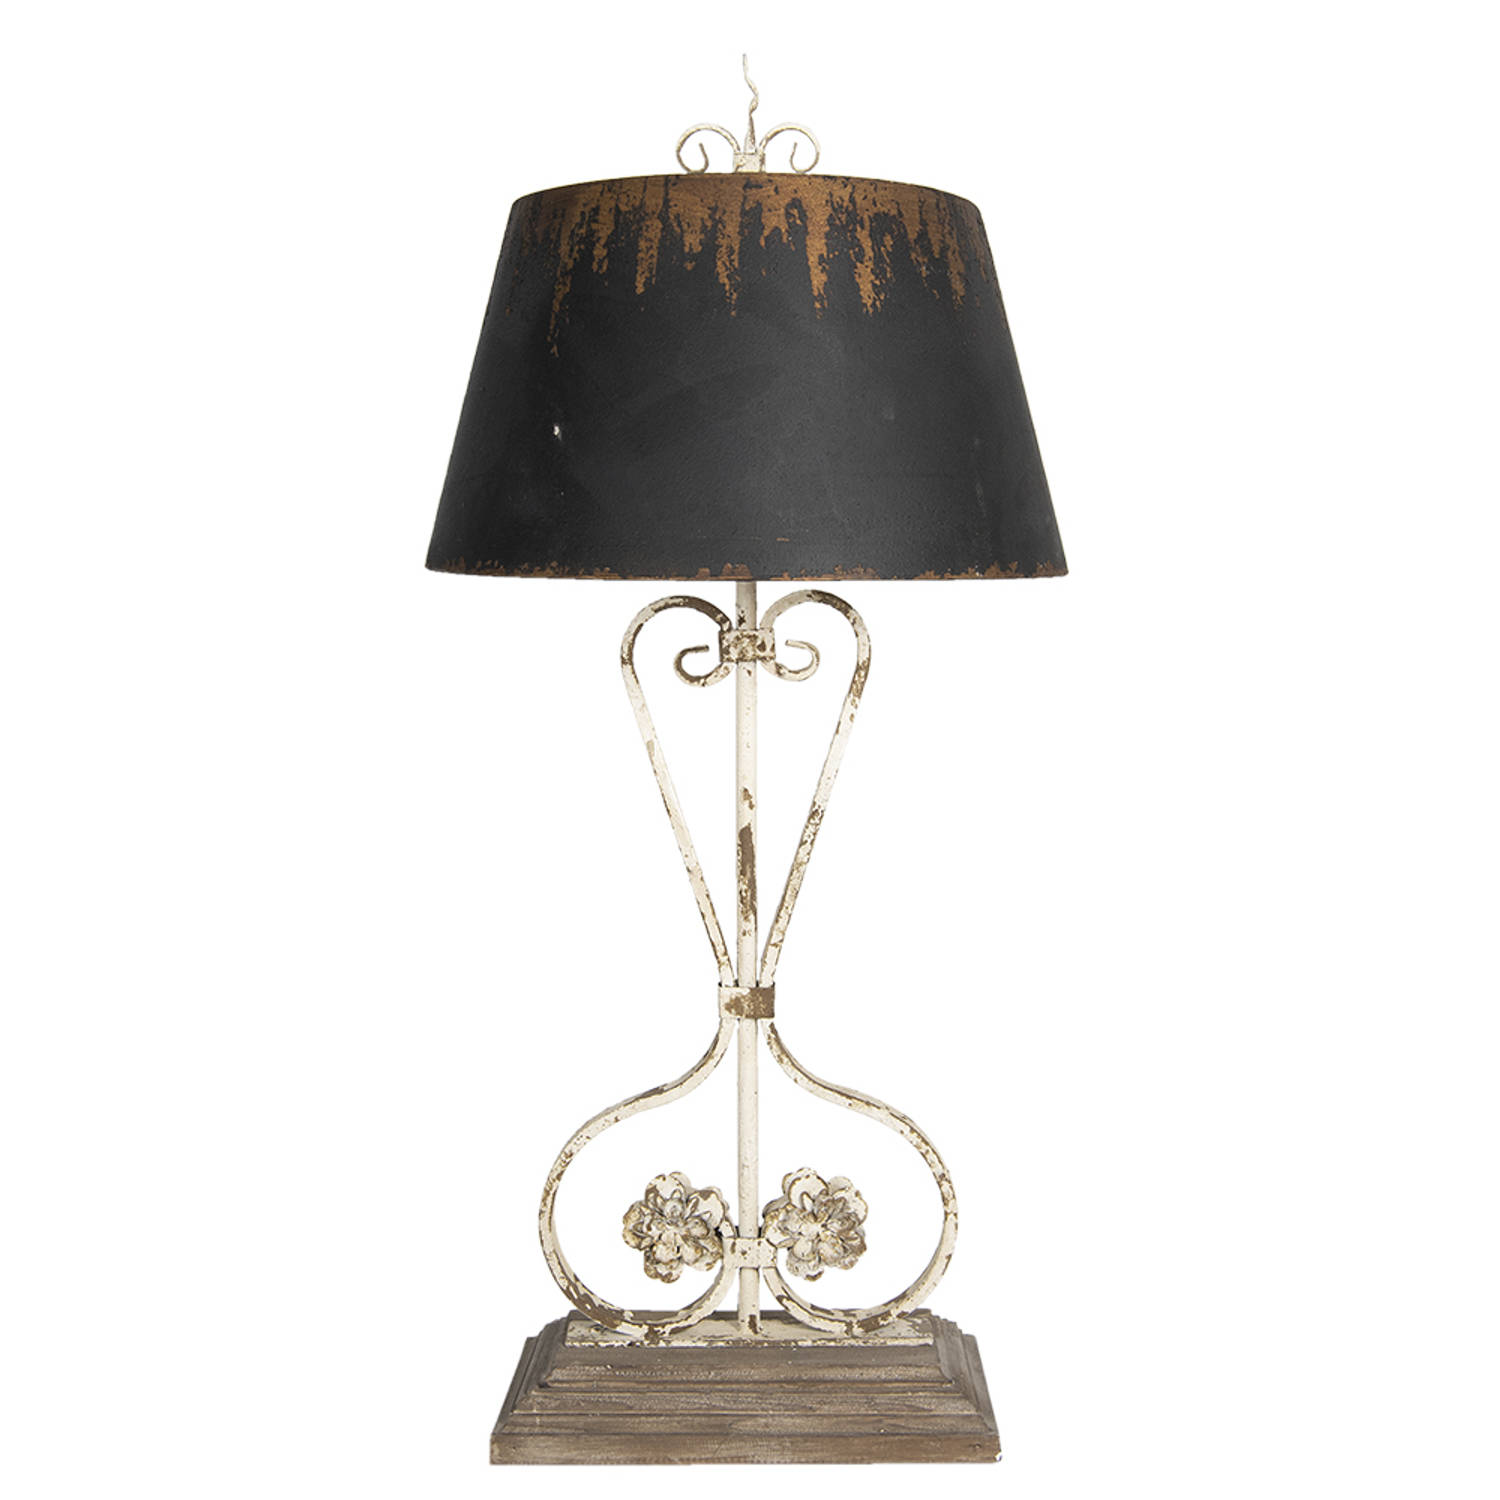 HAES DECO - Tafellamp - Shabby Chic - Vintage / Retro Lamp, 48x48x105 cm - Bruin/Wit - Bureaulamp, Nachtlamp, Sfeerlamp